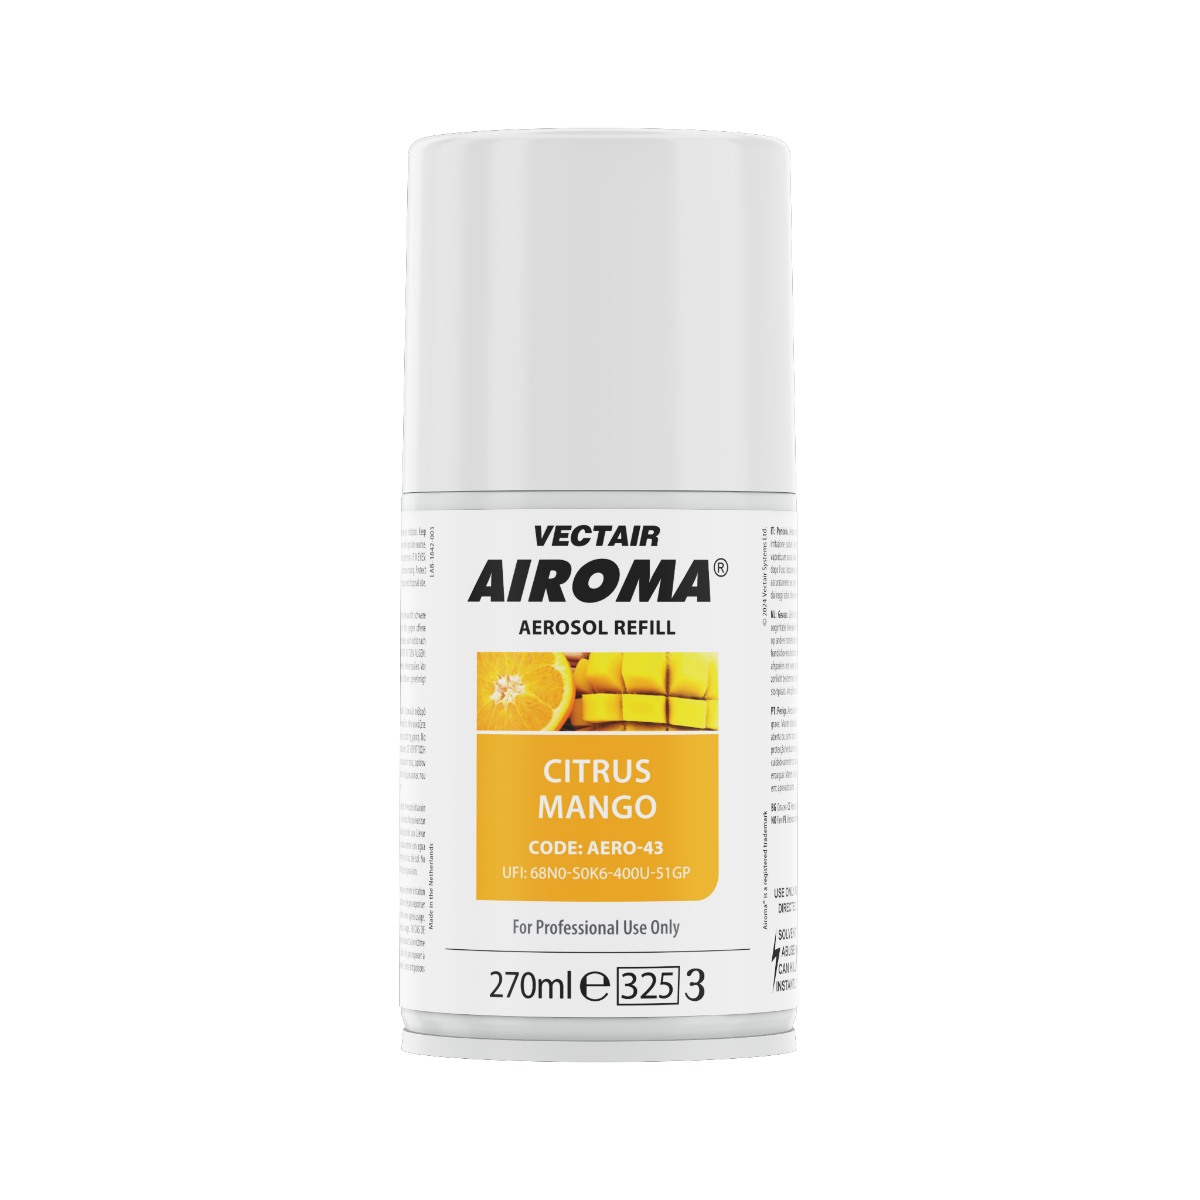 Airoma Citrus Mango Refill 270ml